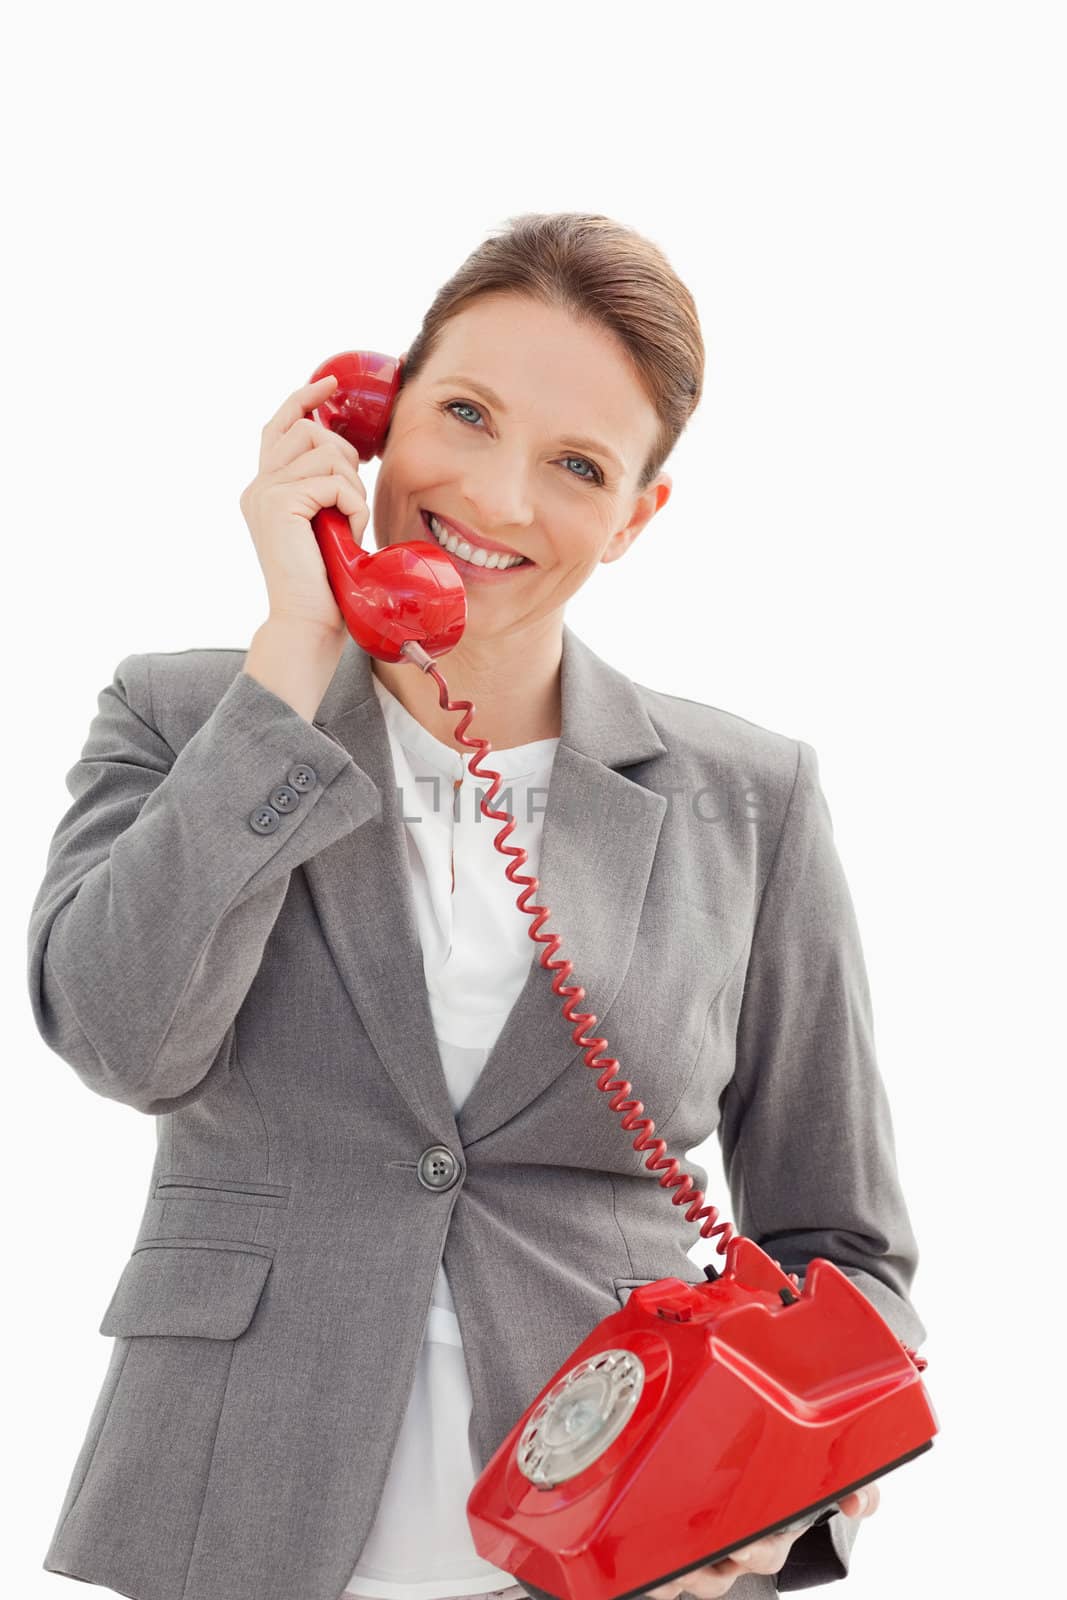 Happy businesswoman talking on the phone by Wavebreakmedia